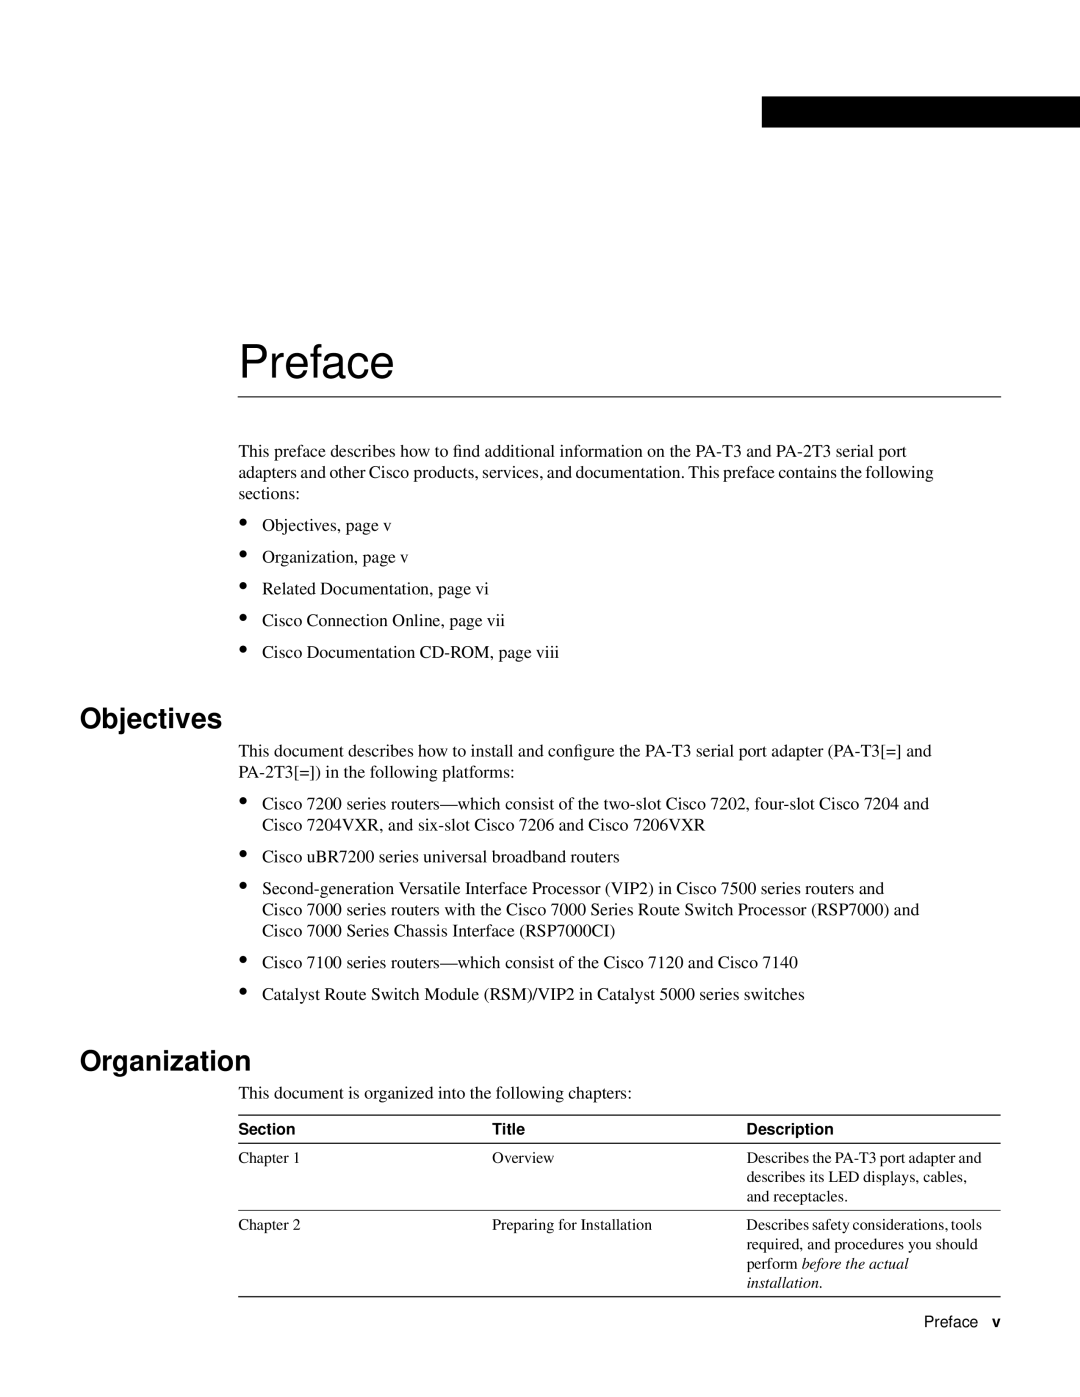 Cisco Systems PA-T3 manual Preface, Objectives, Organization 